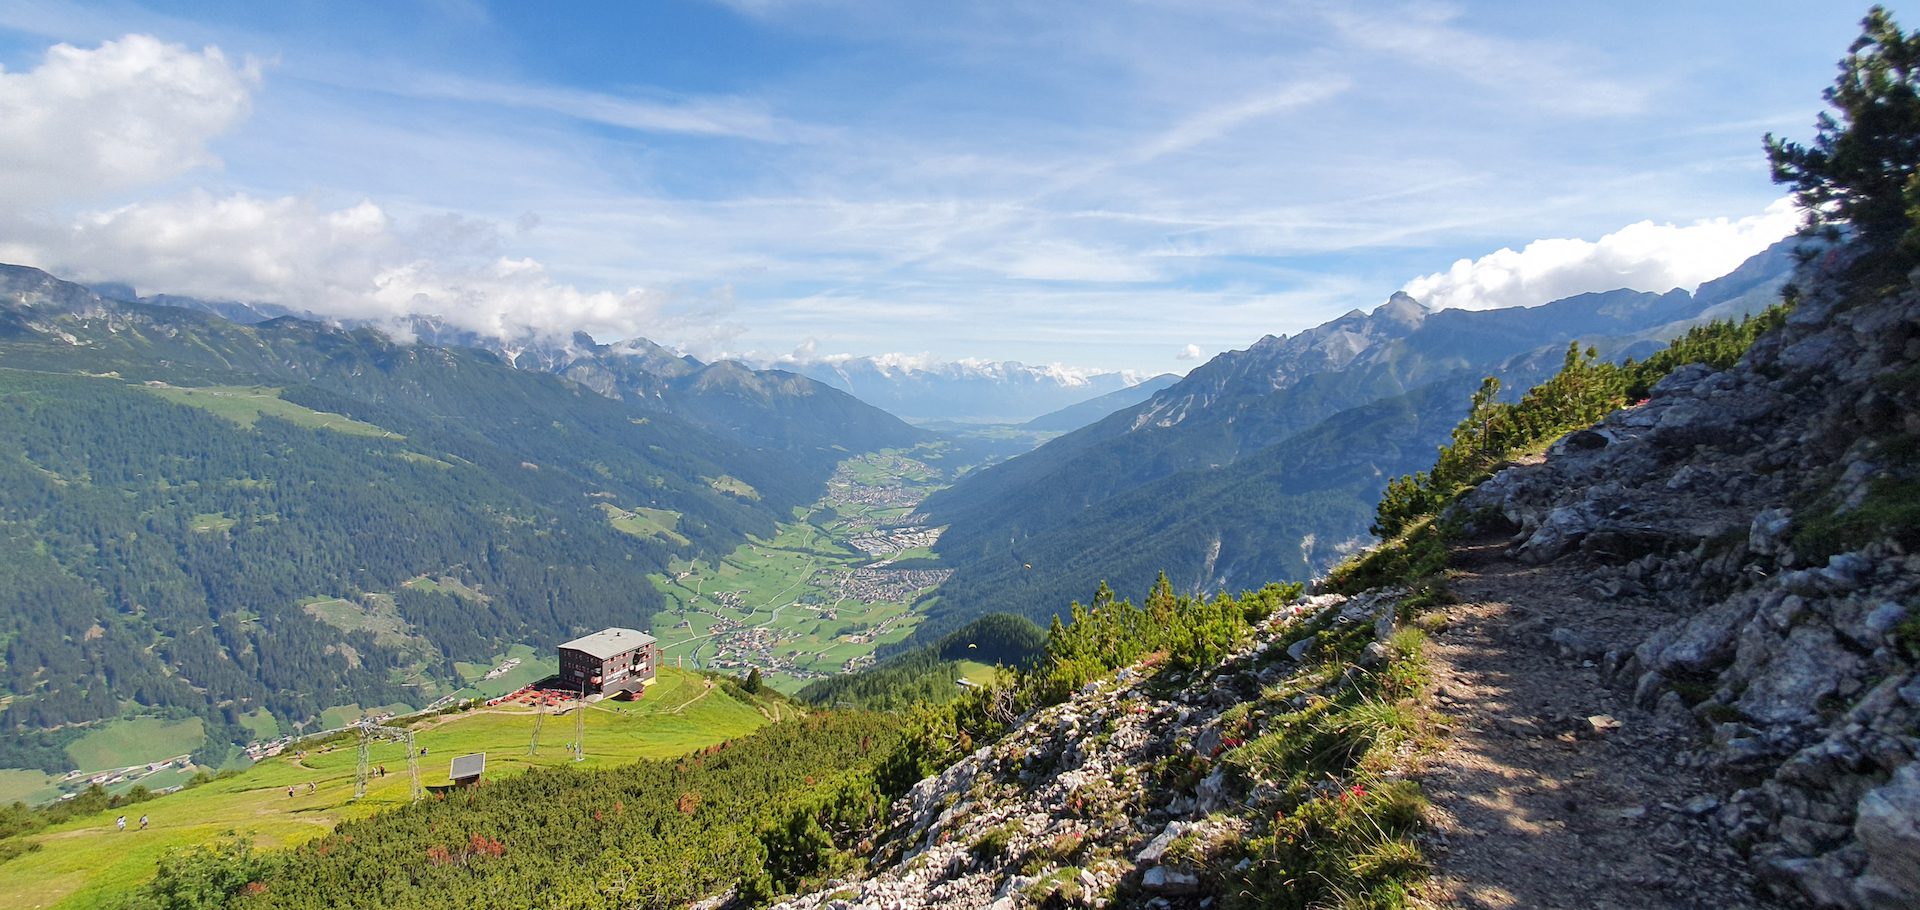 Elferhütte above the Stubai valley